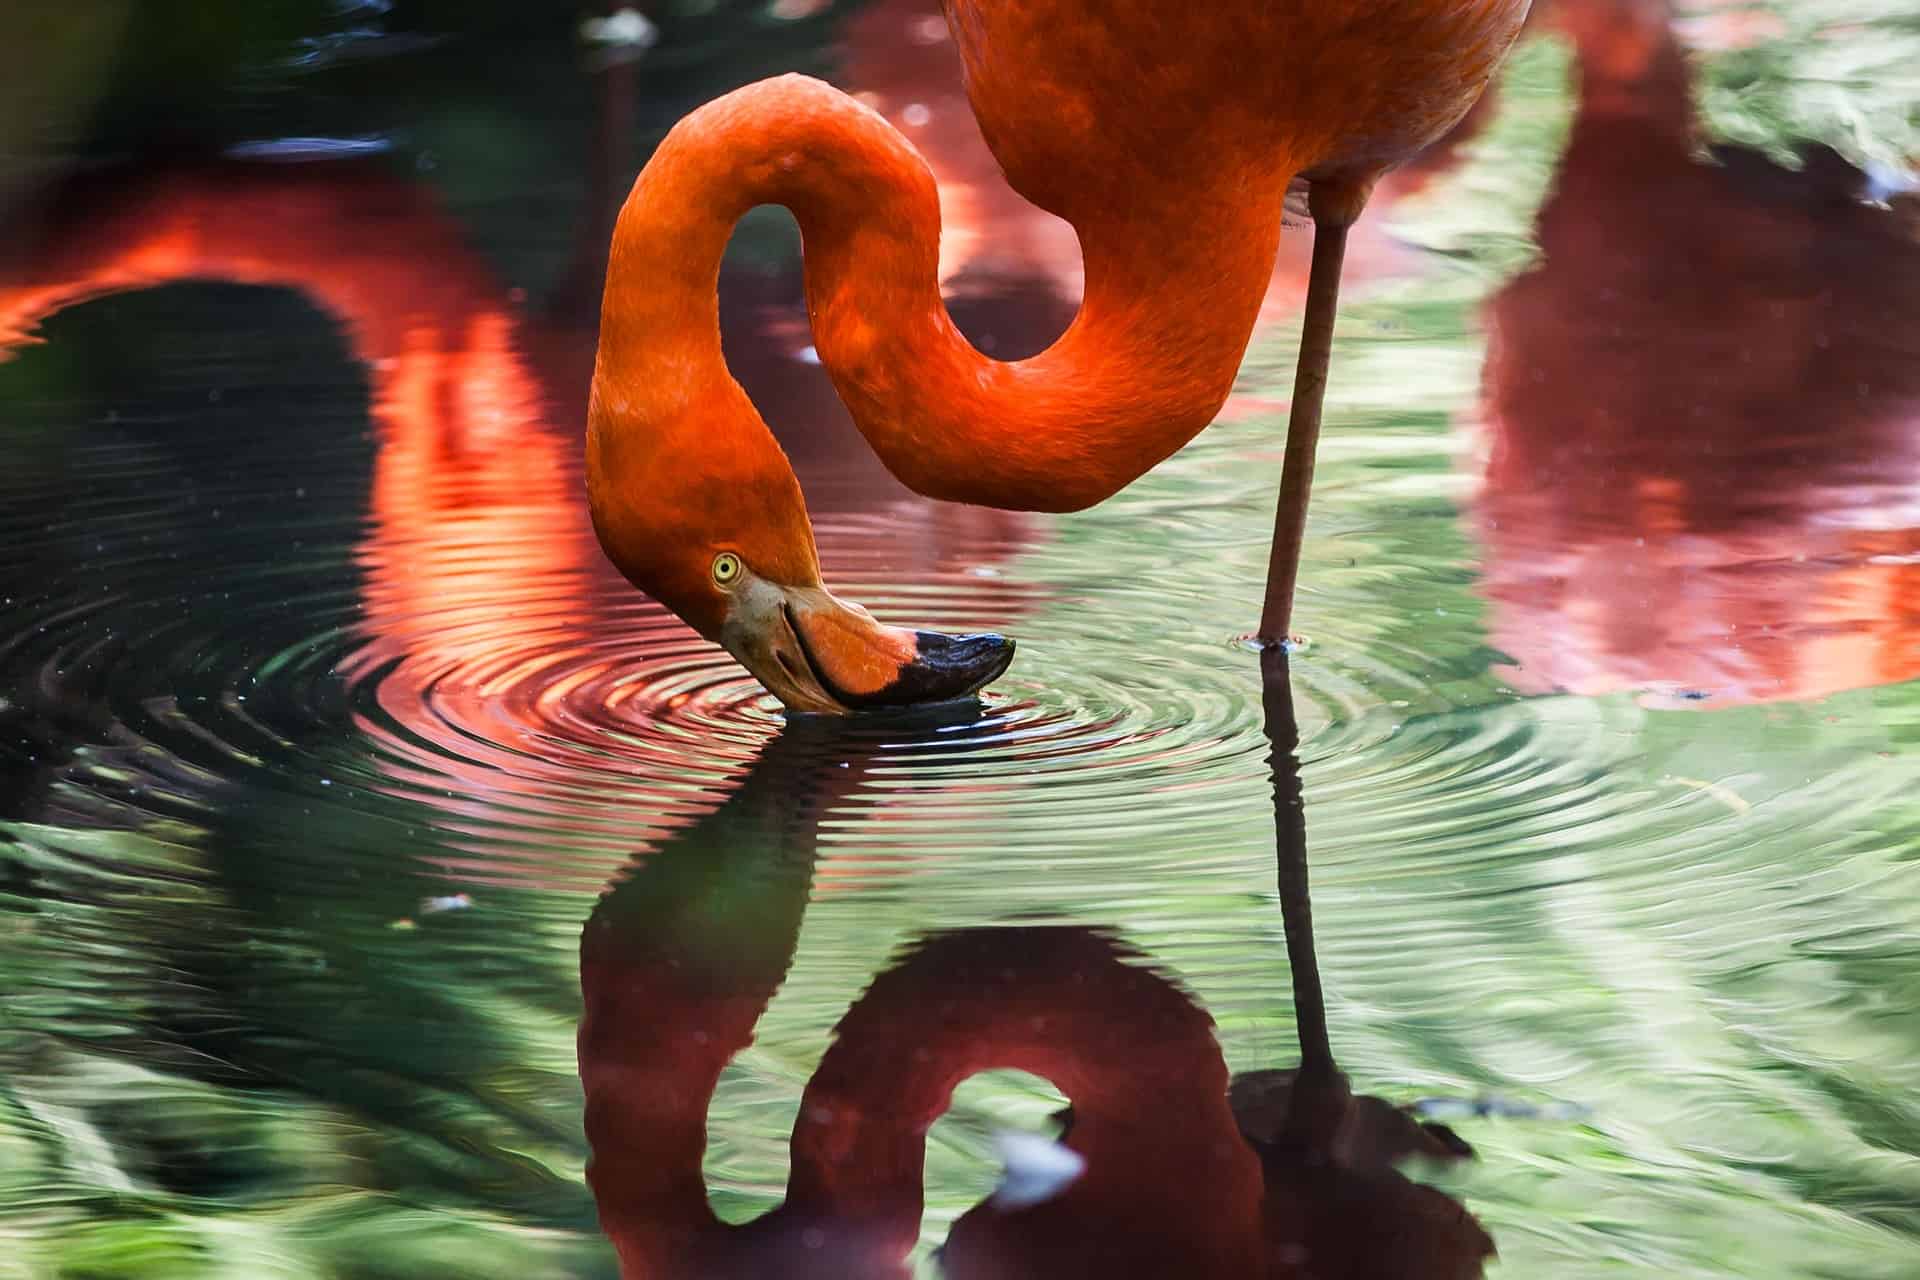 flamingo adaptations for survival